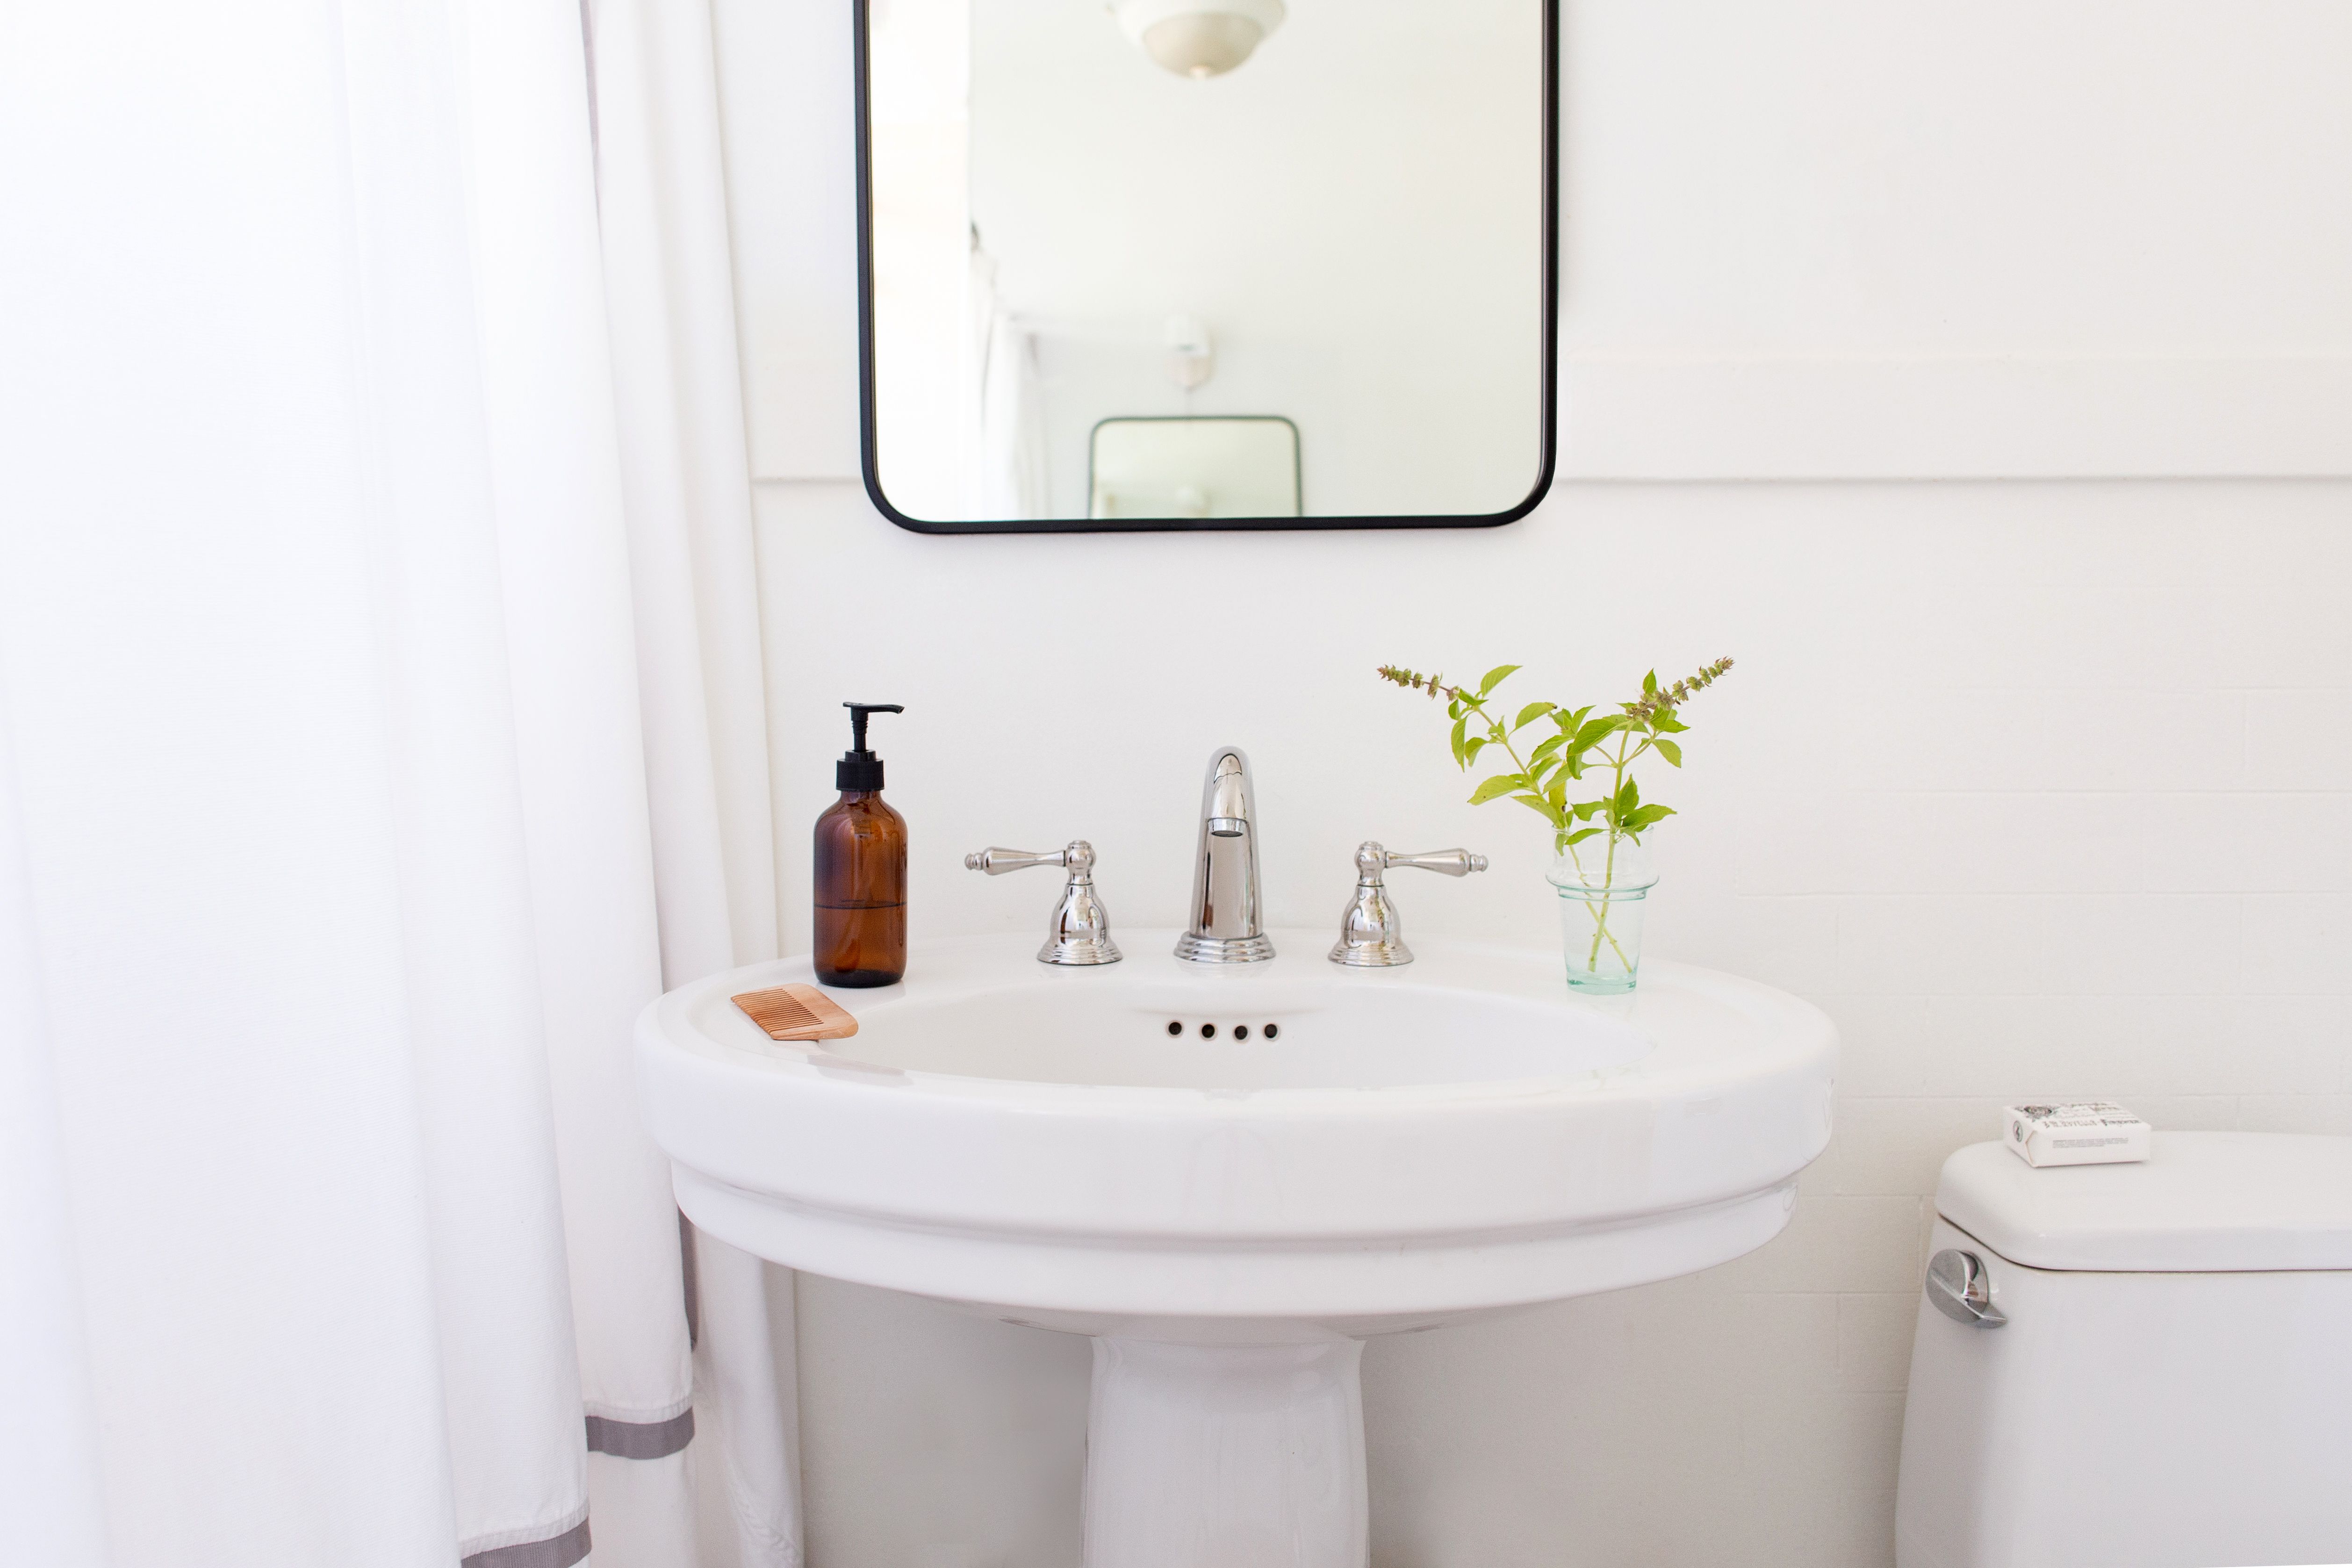 7 Easy Ways to Make a Small Bathroom Feel Bigger